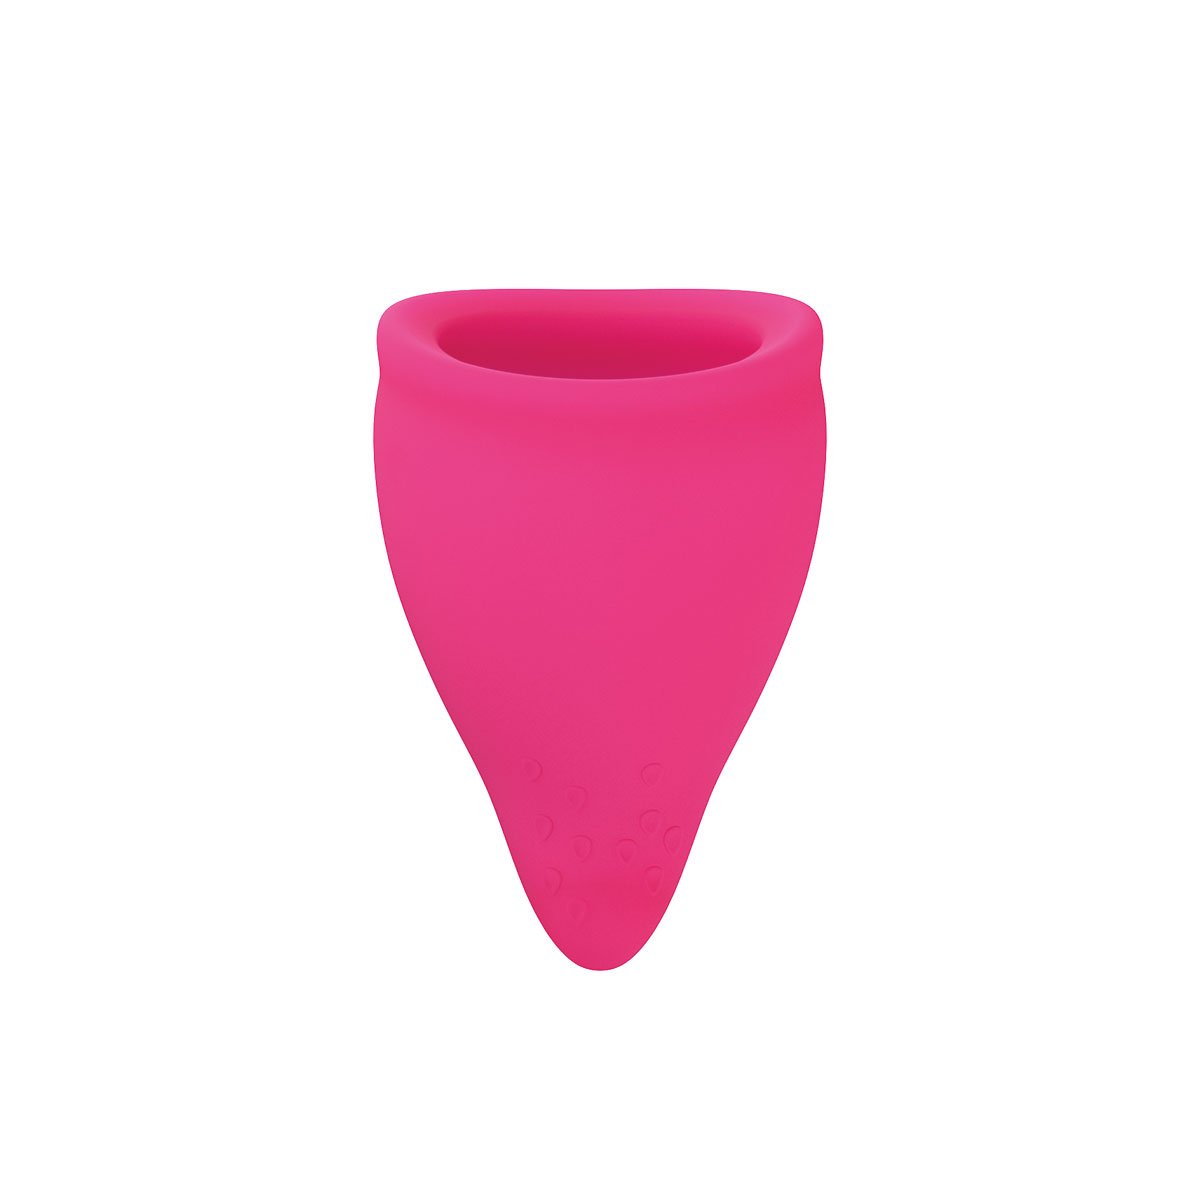 Fun Factory Fun Cup Explore Kit Silicone Menstrual Cups - Hamilton Park Electronics